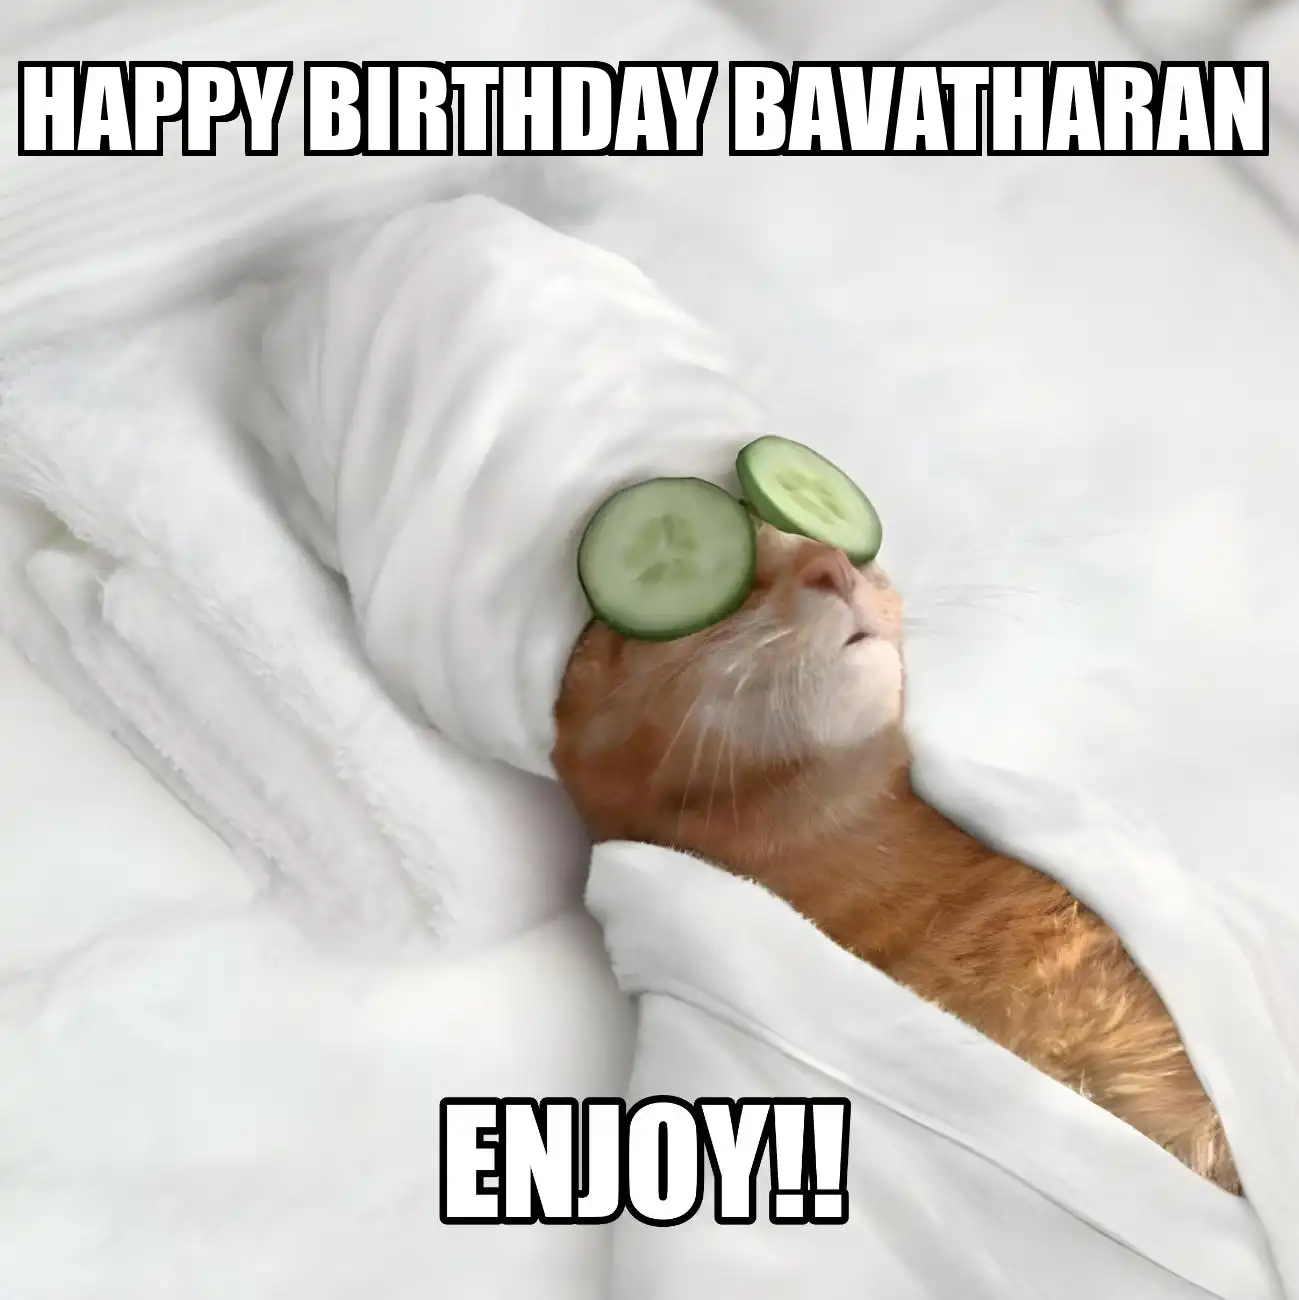 Happy Birthday Bavatharan Enjoy Cat Meme